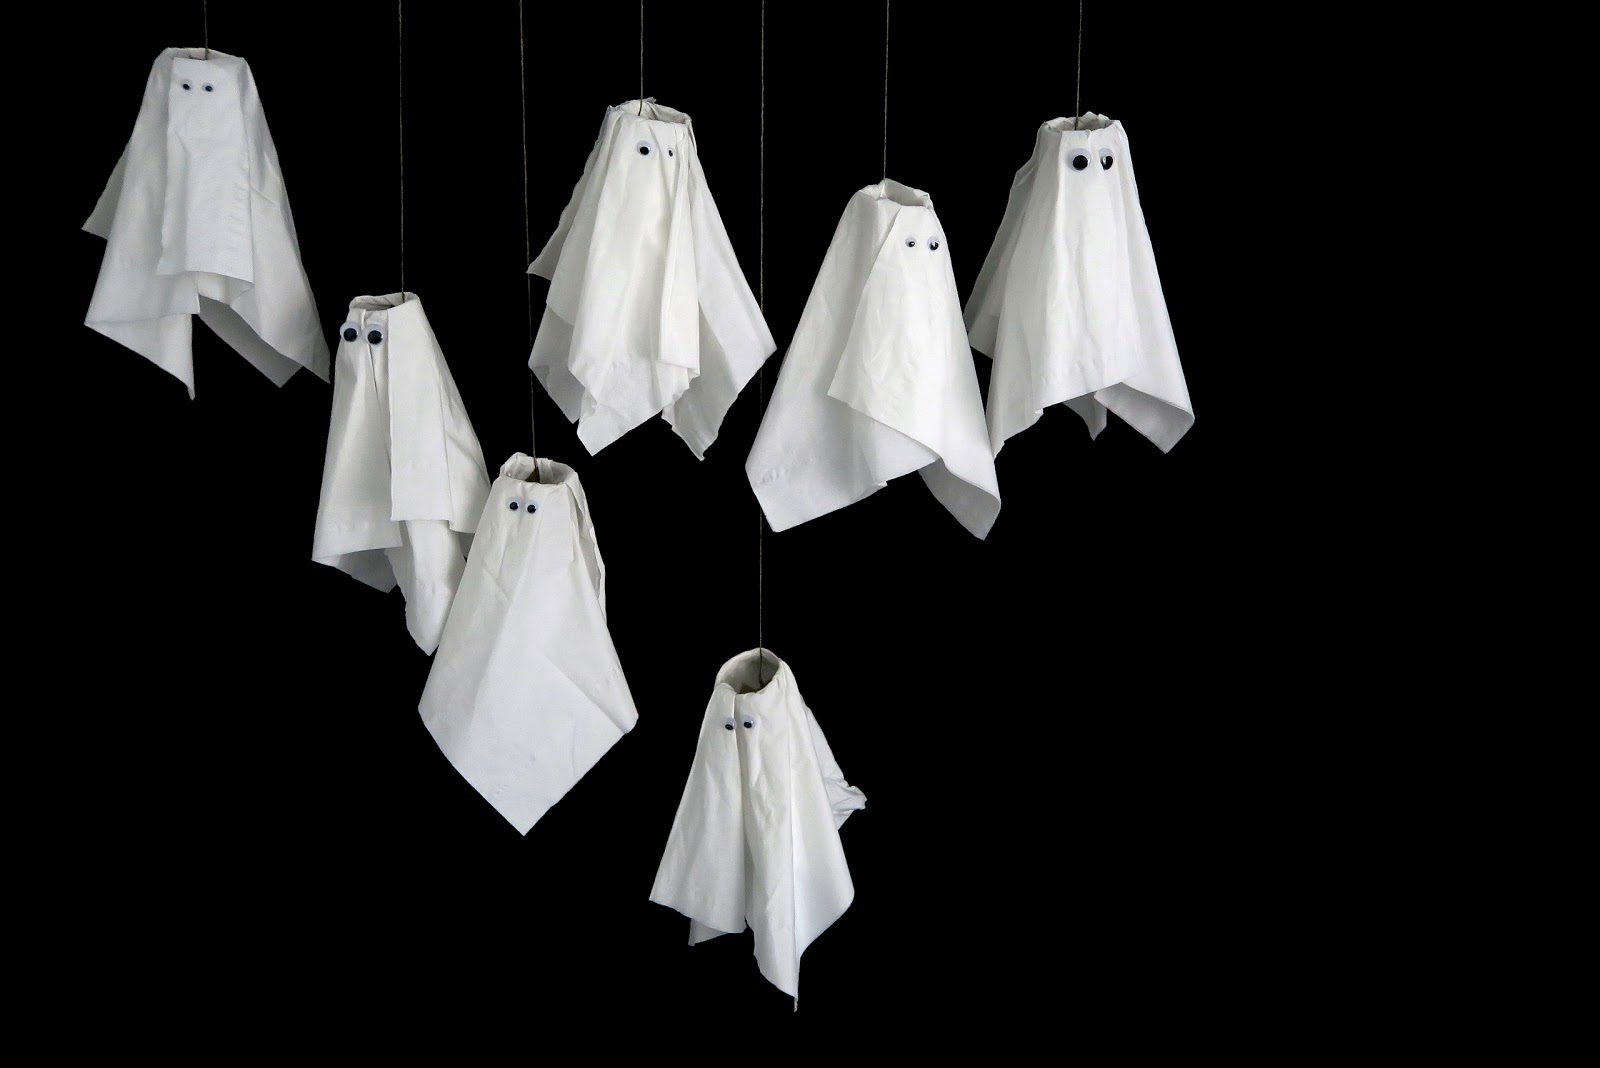 Last minute tissue ghosts | mamaisdreaming.blogspot.co.uk